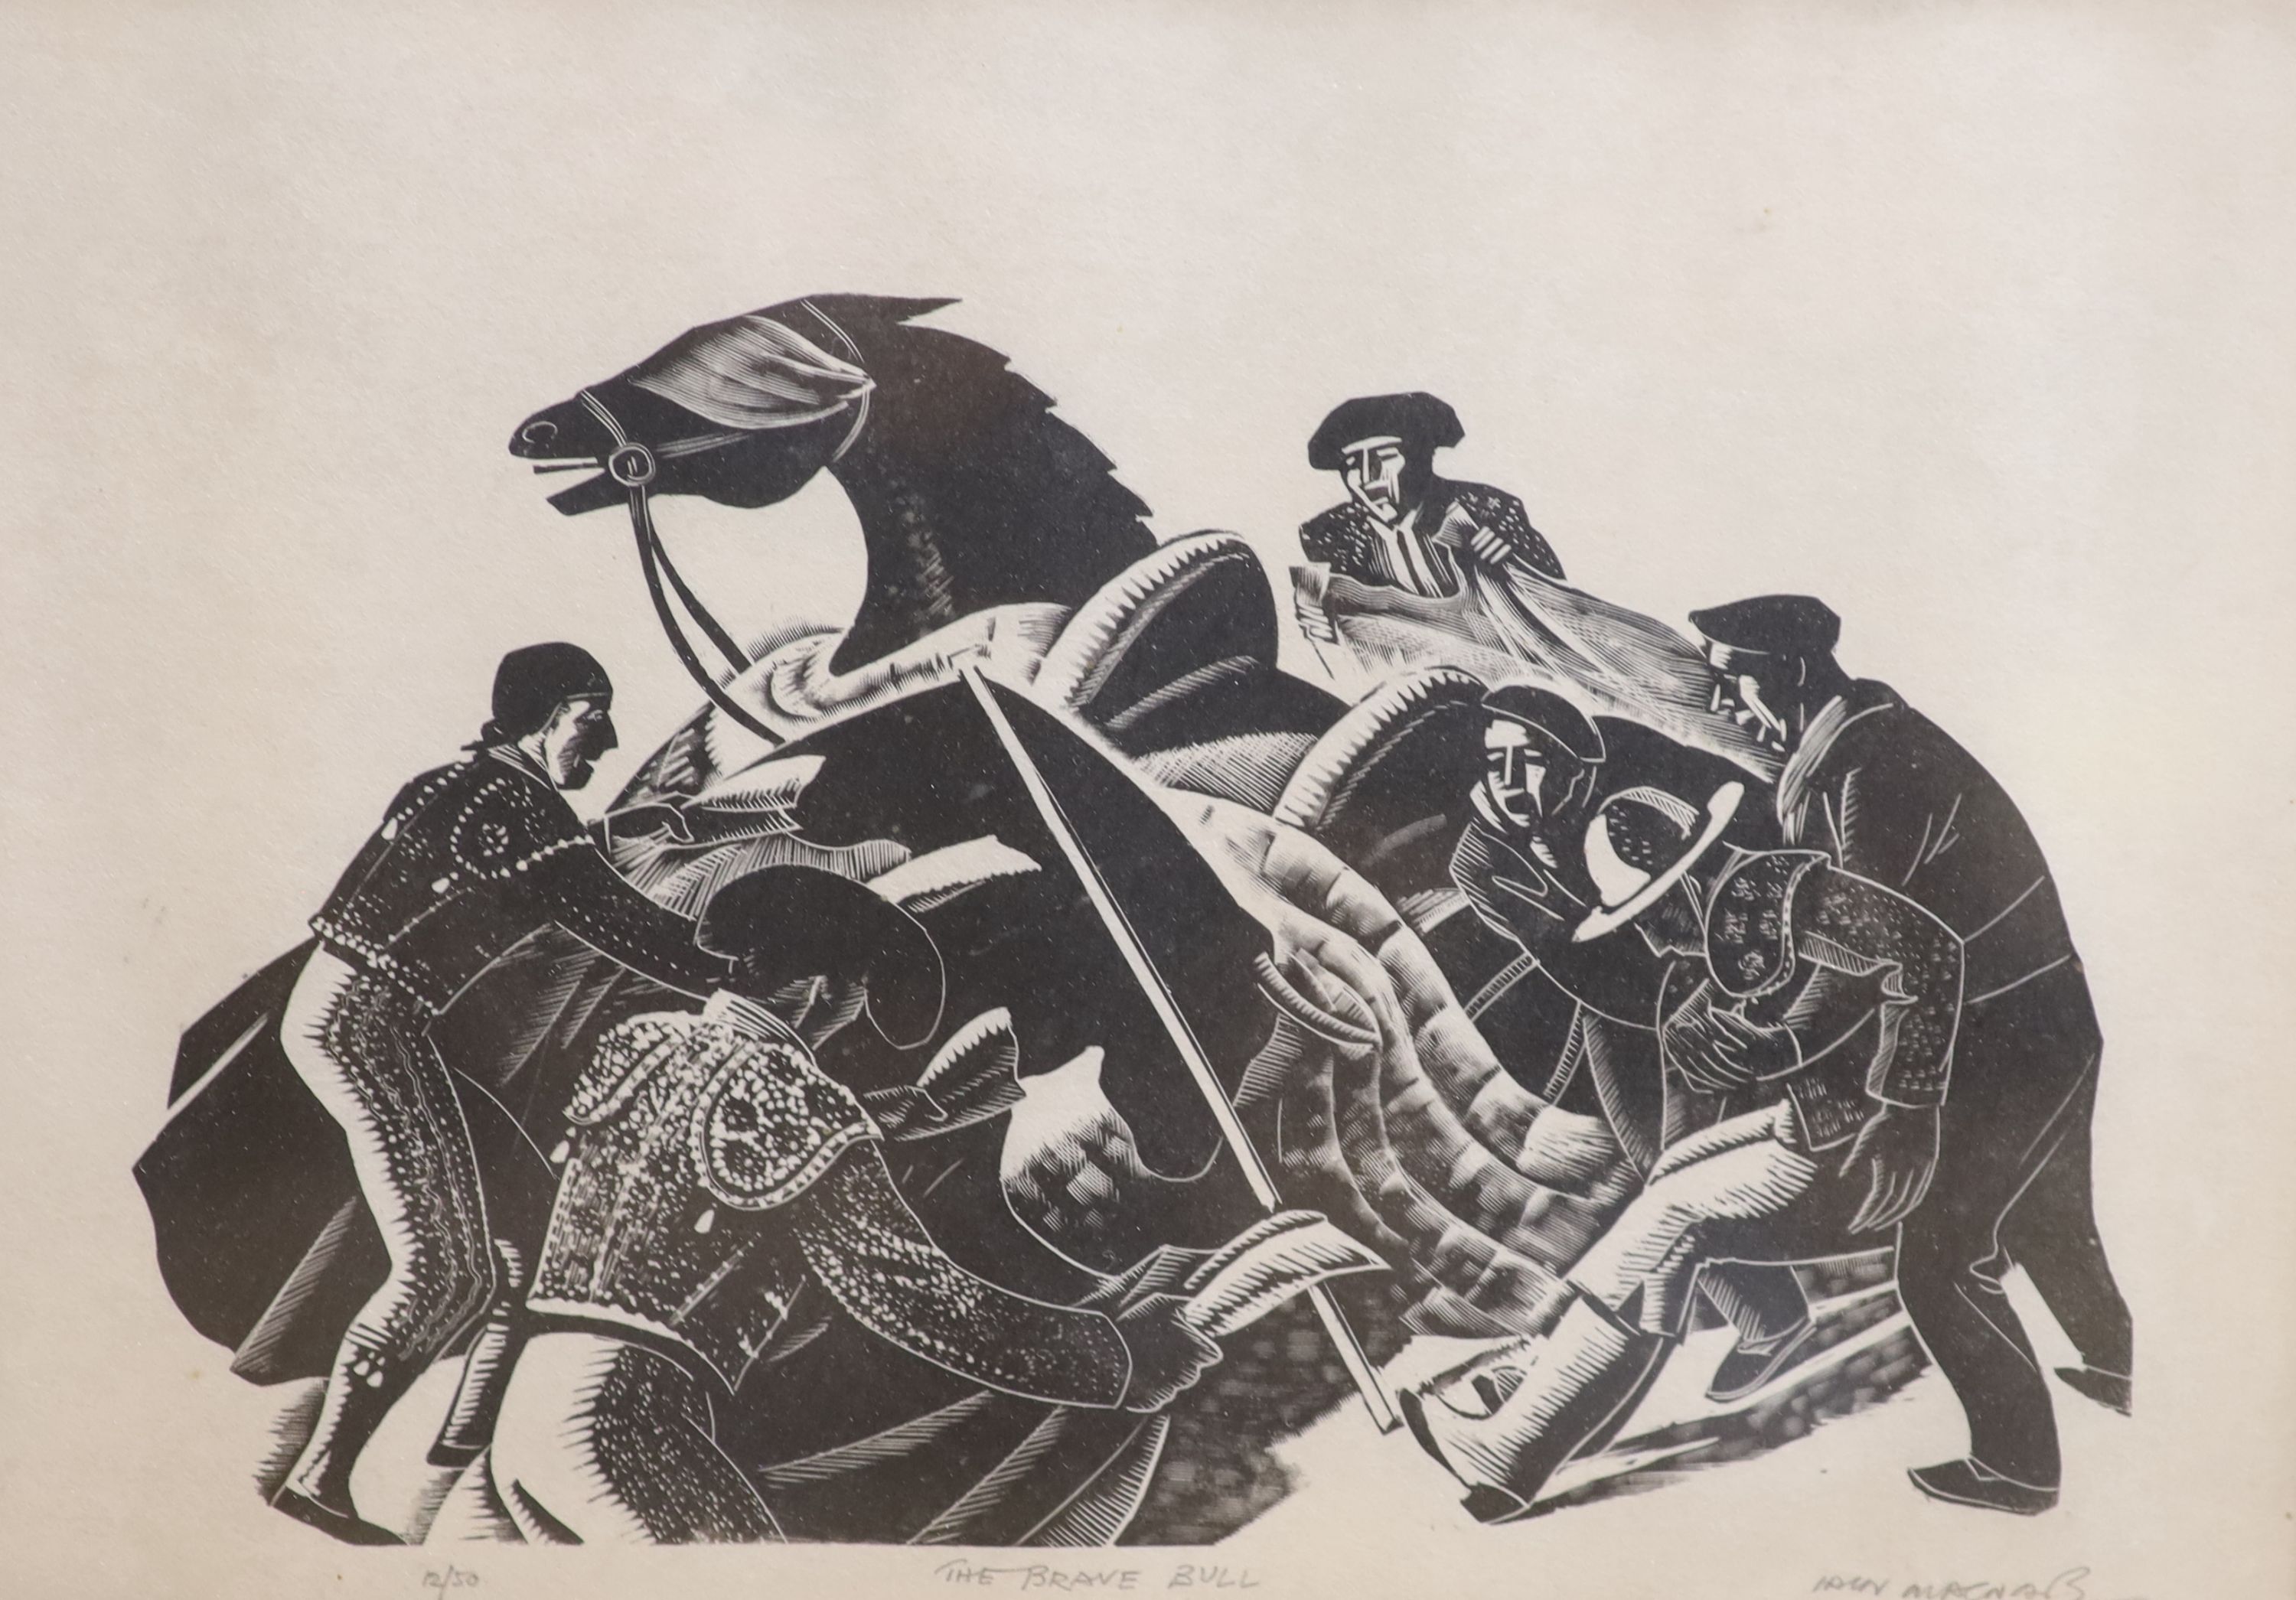 Iain Macnab (1890-1967), woodcut, 'The Brave Bull', signed in pencil, 12/50, 17 x 24cm